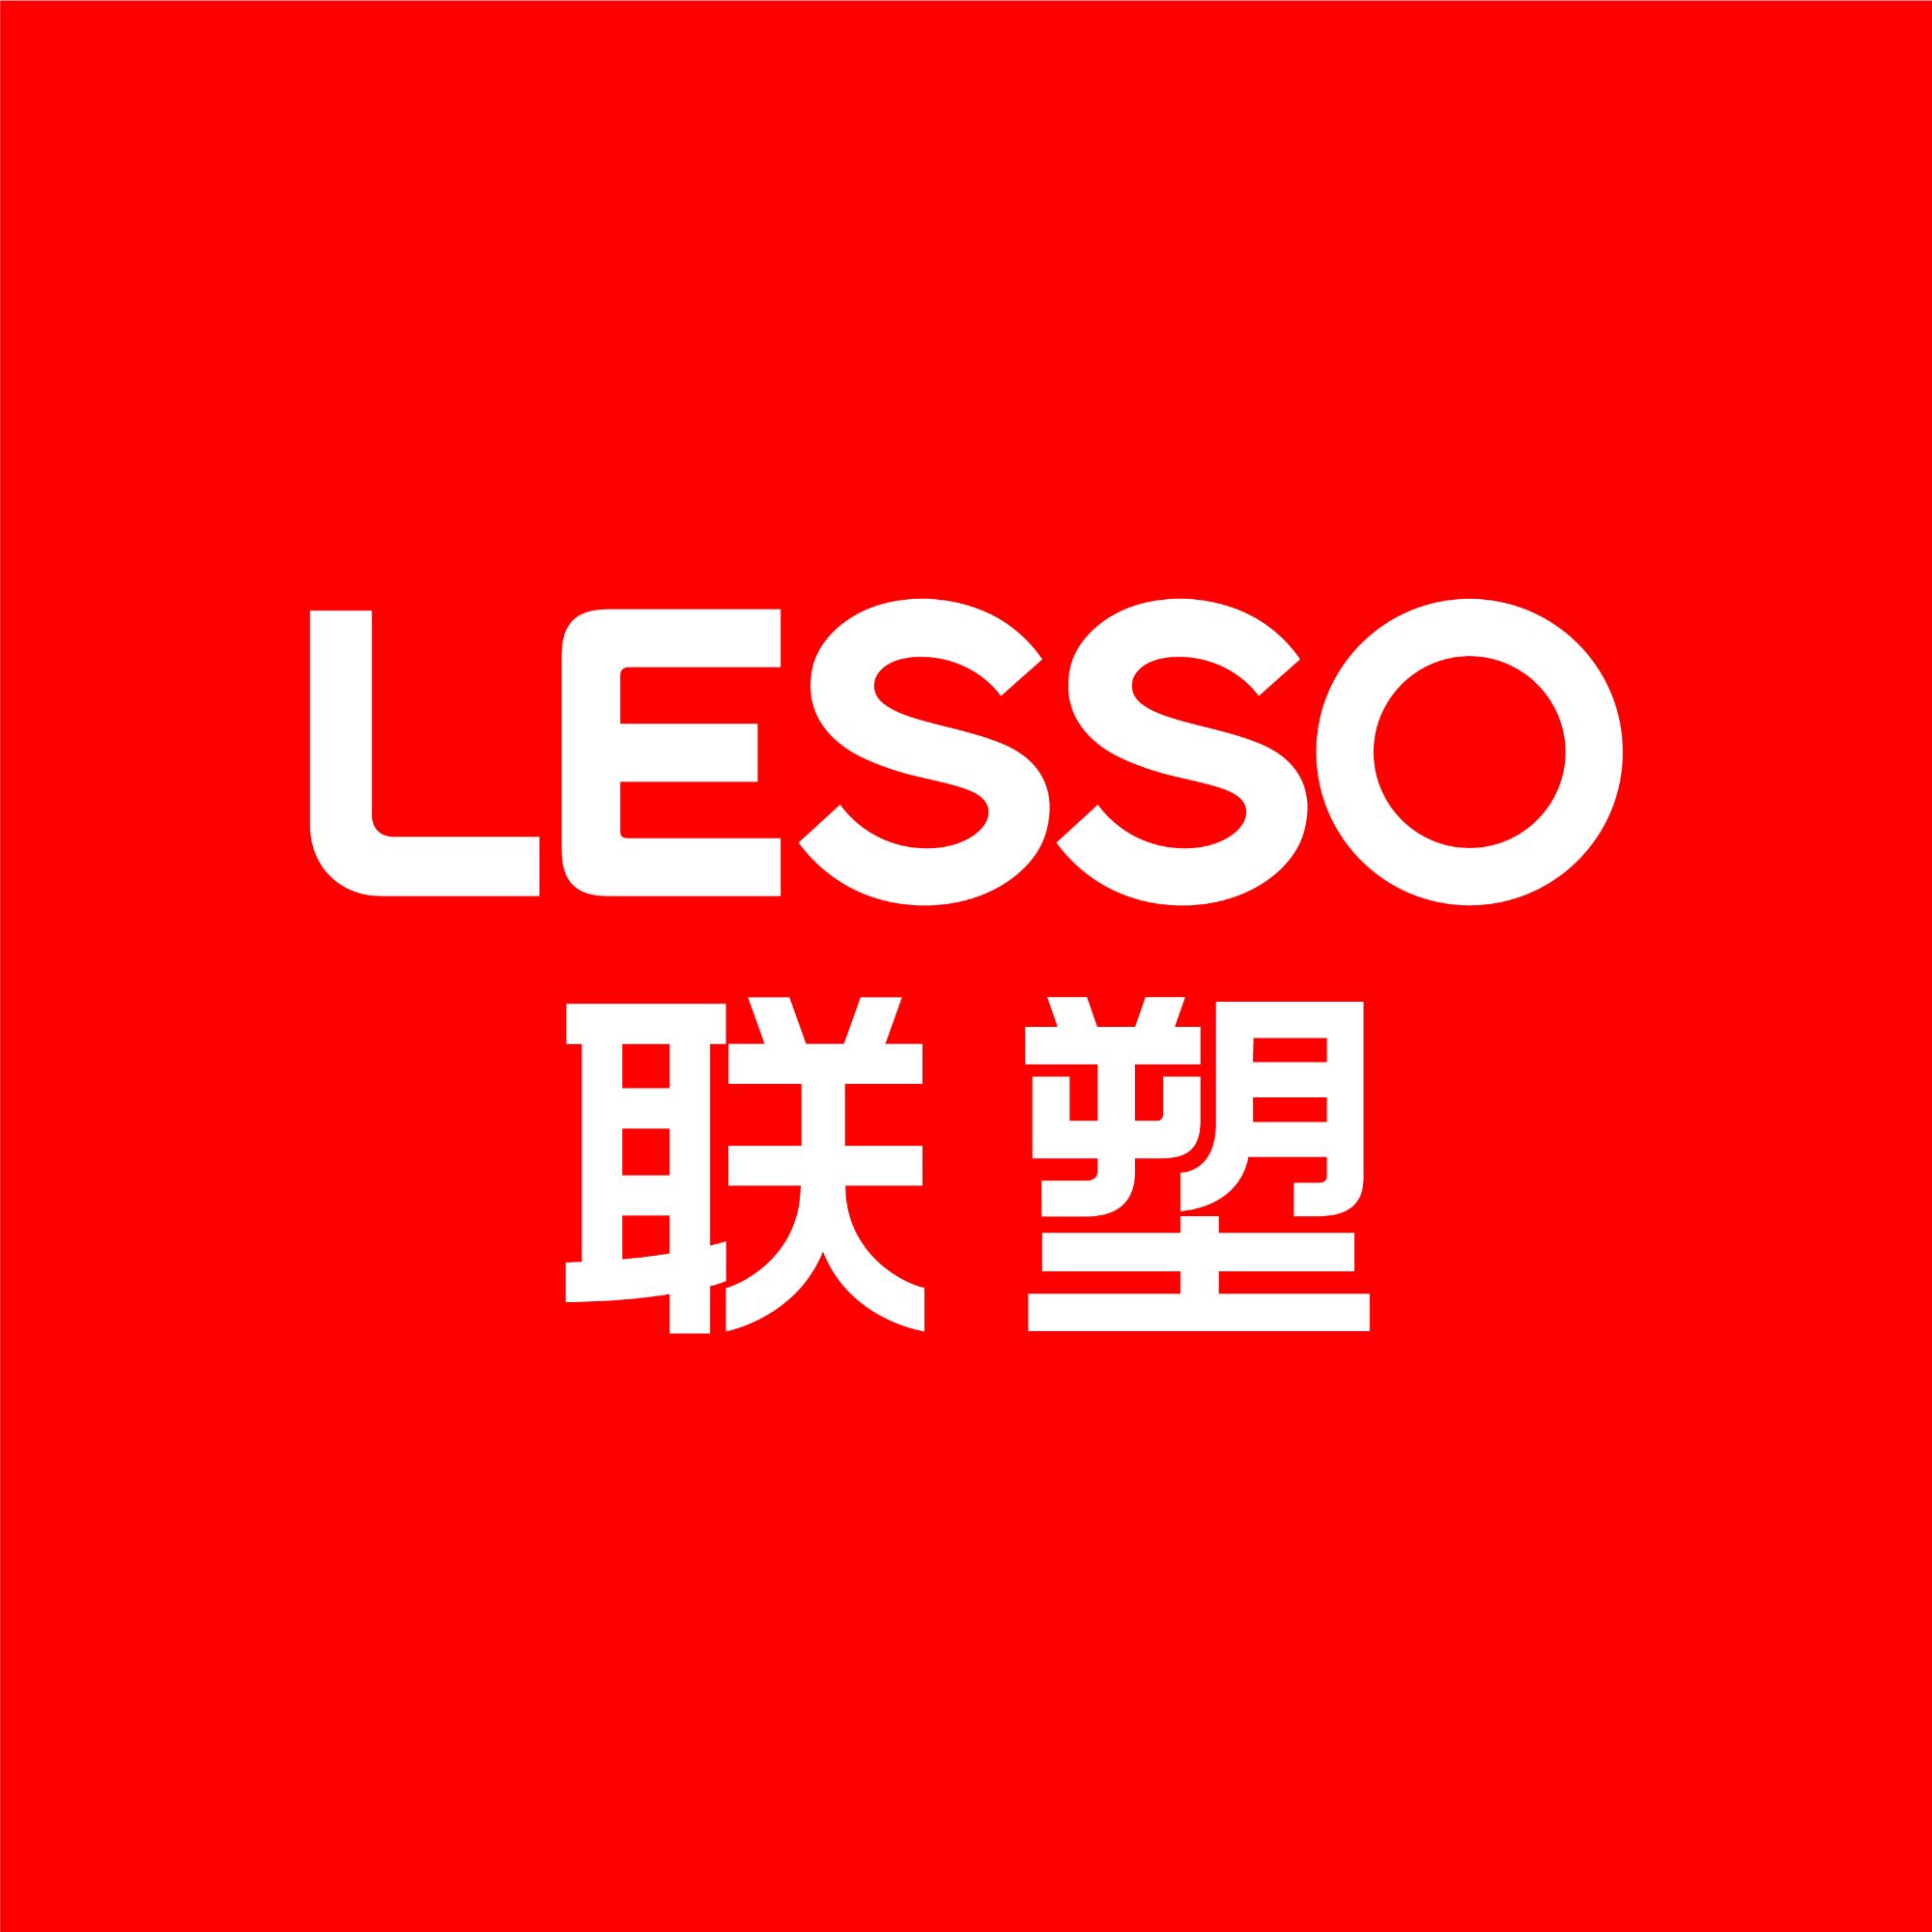 Lesso&epco logo